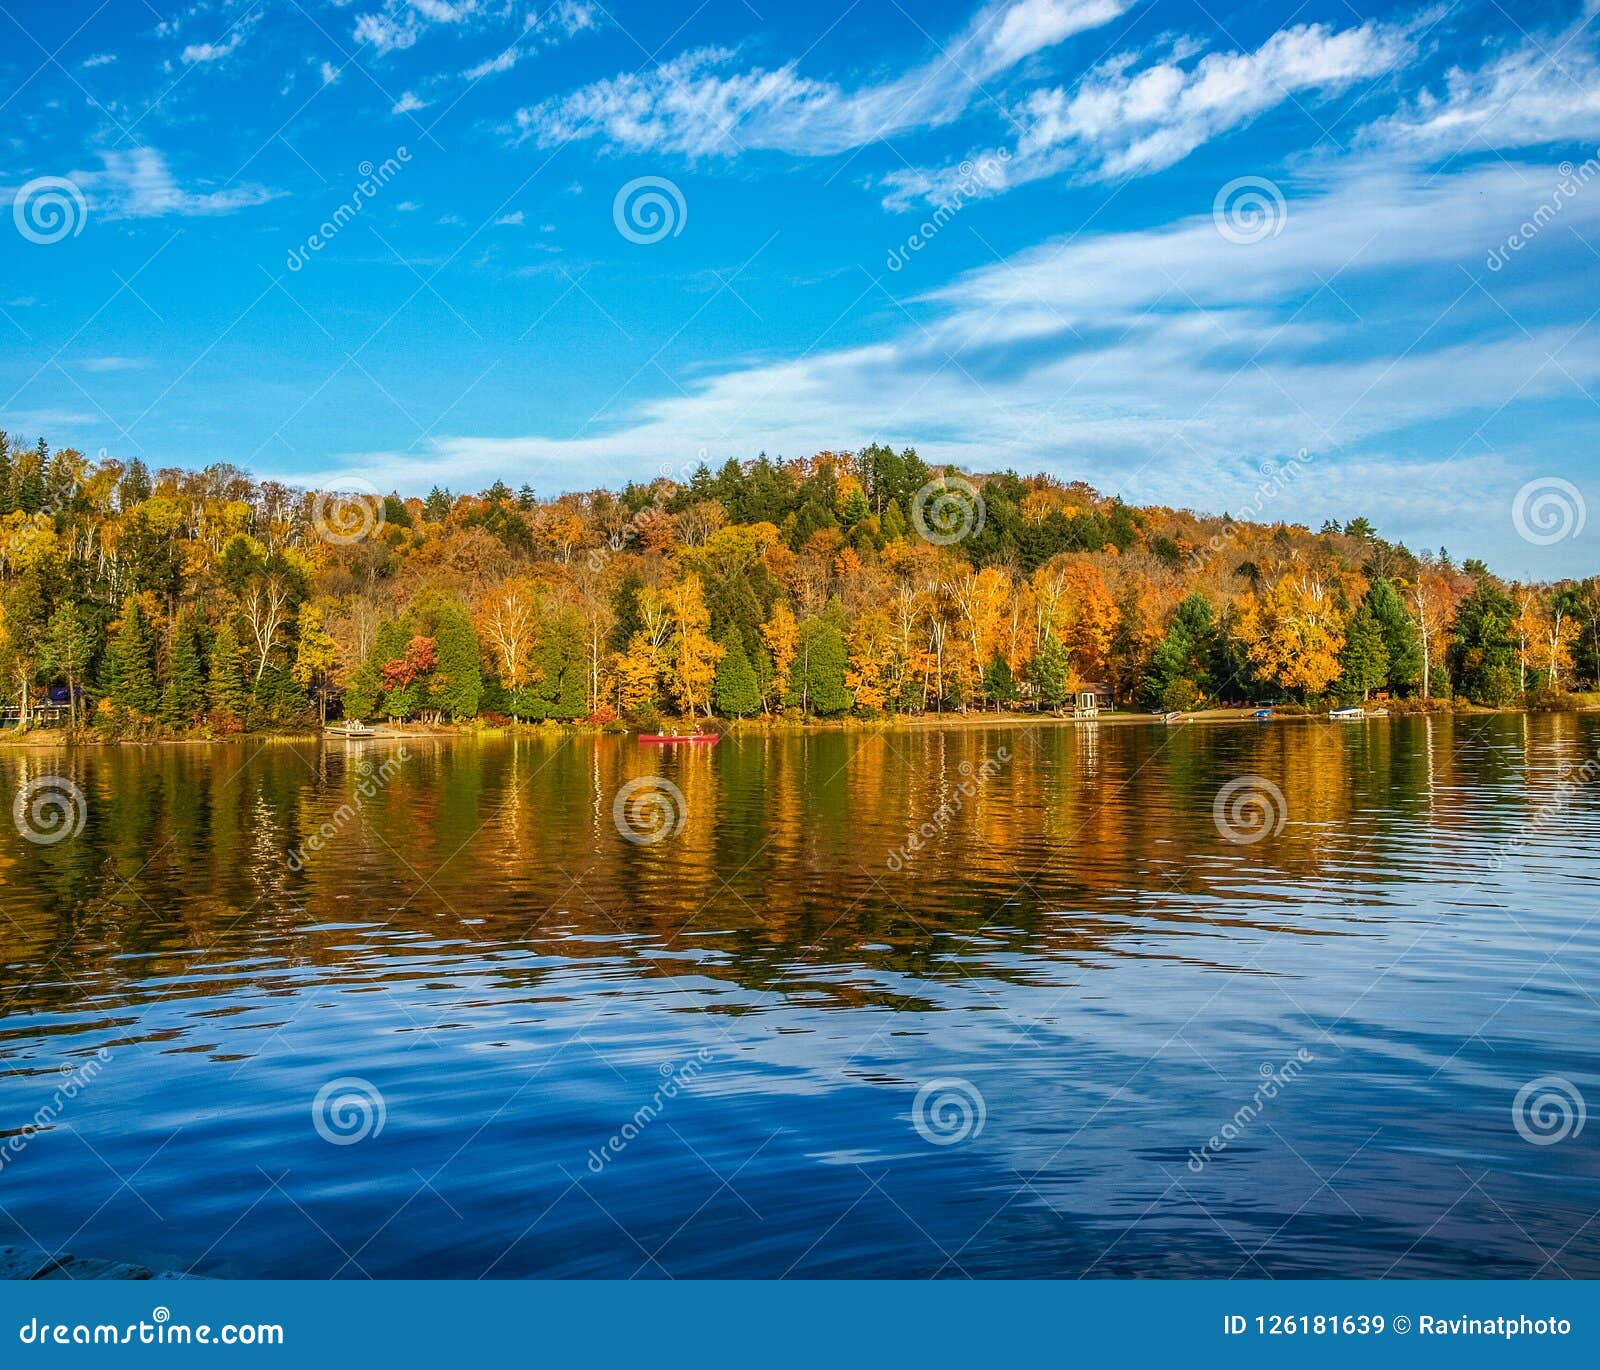 beautiful fall colors in algonquin provincial park, ontario, canada